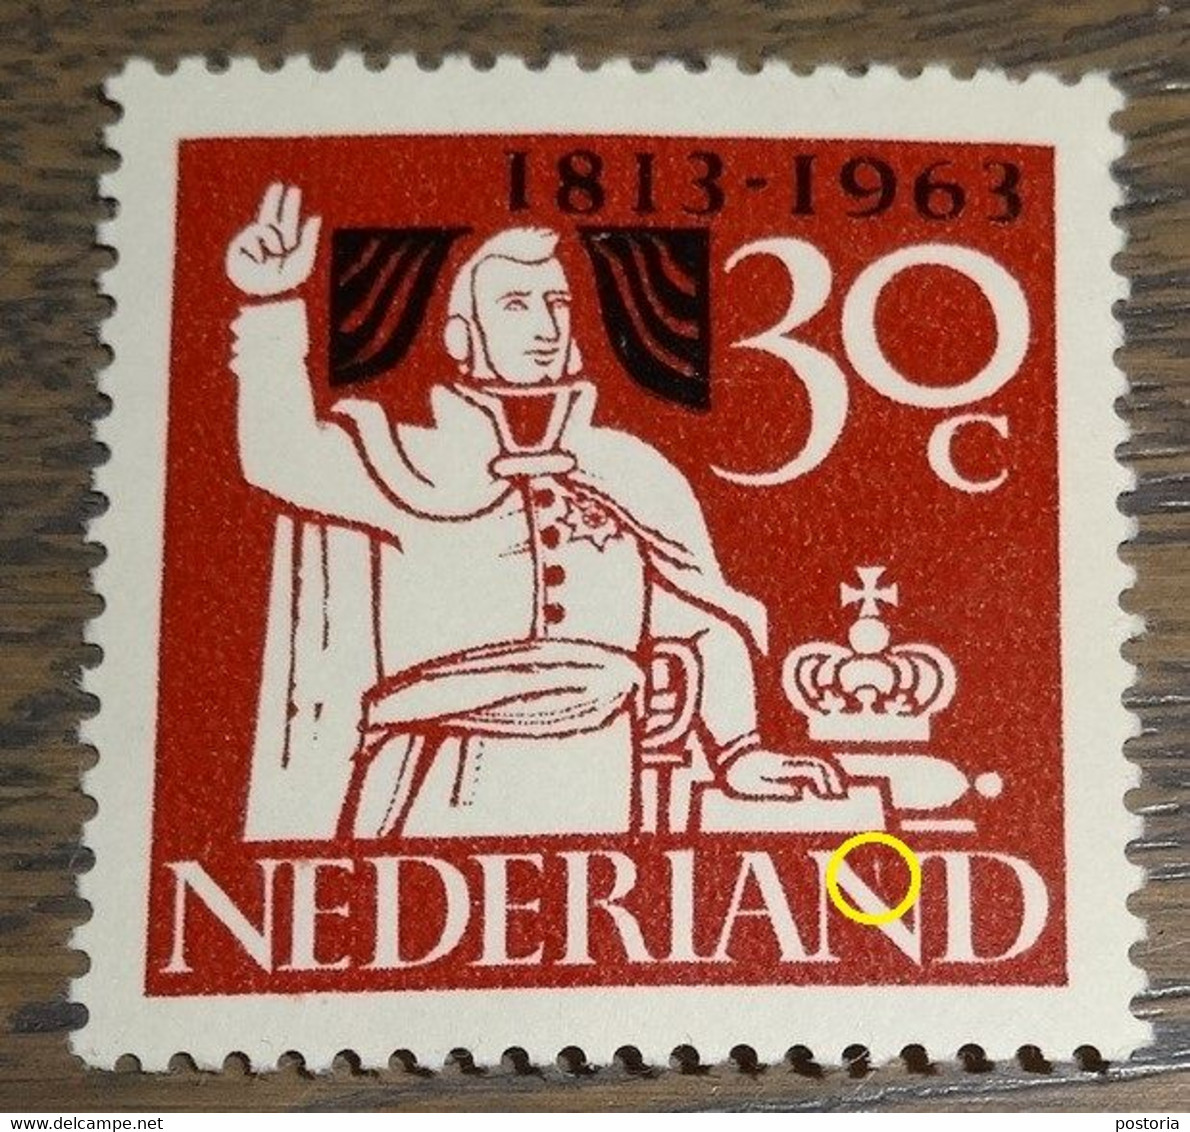 Nederland - MAST - 810 PM - 1963 - Plaatfout - Postfris - Wit Streepje In 2e N Van NEDERLAND - Plaatfouten En Curiosa